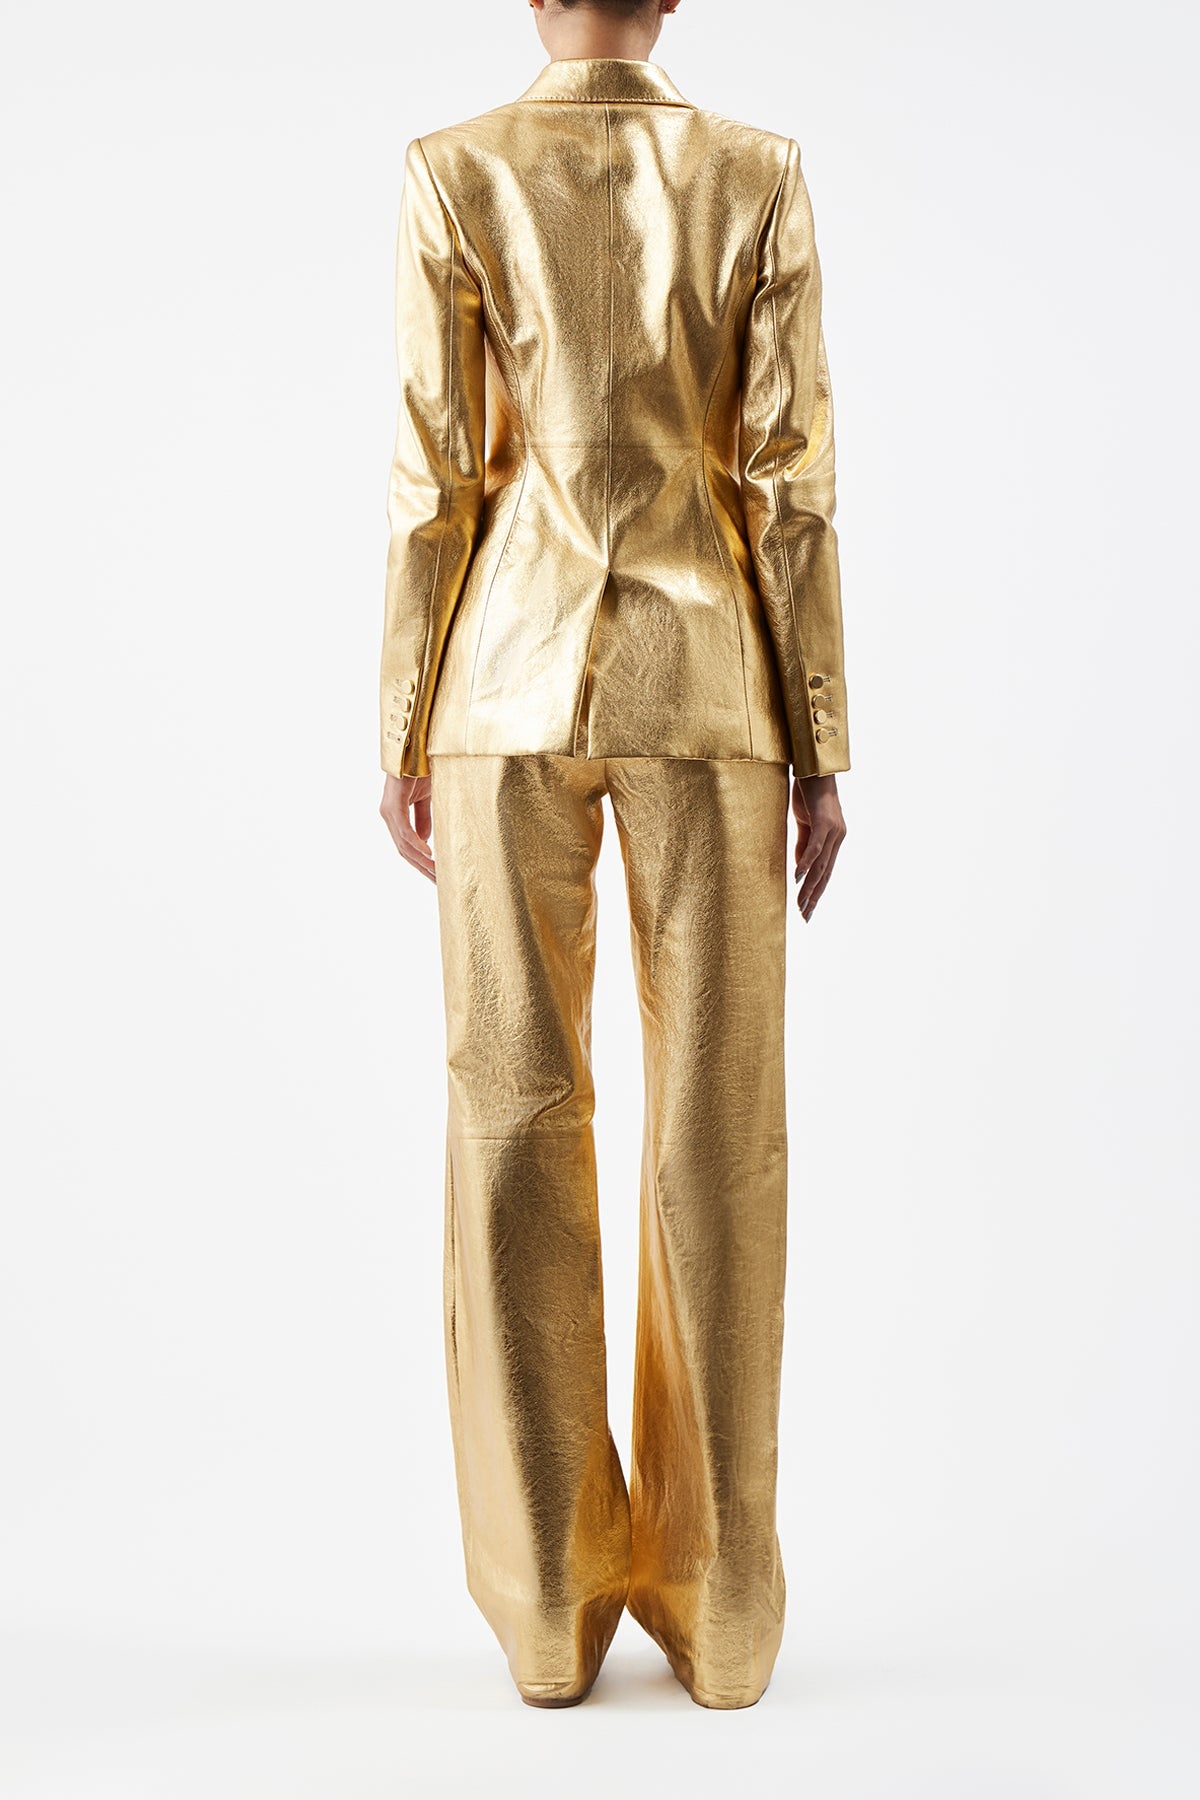 Vesta Pant in Gold Leather - 5